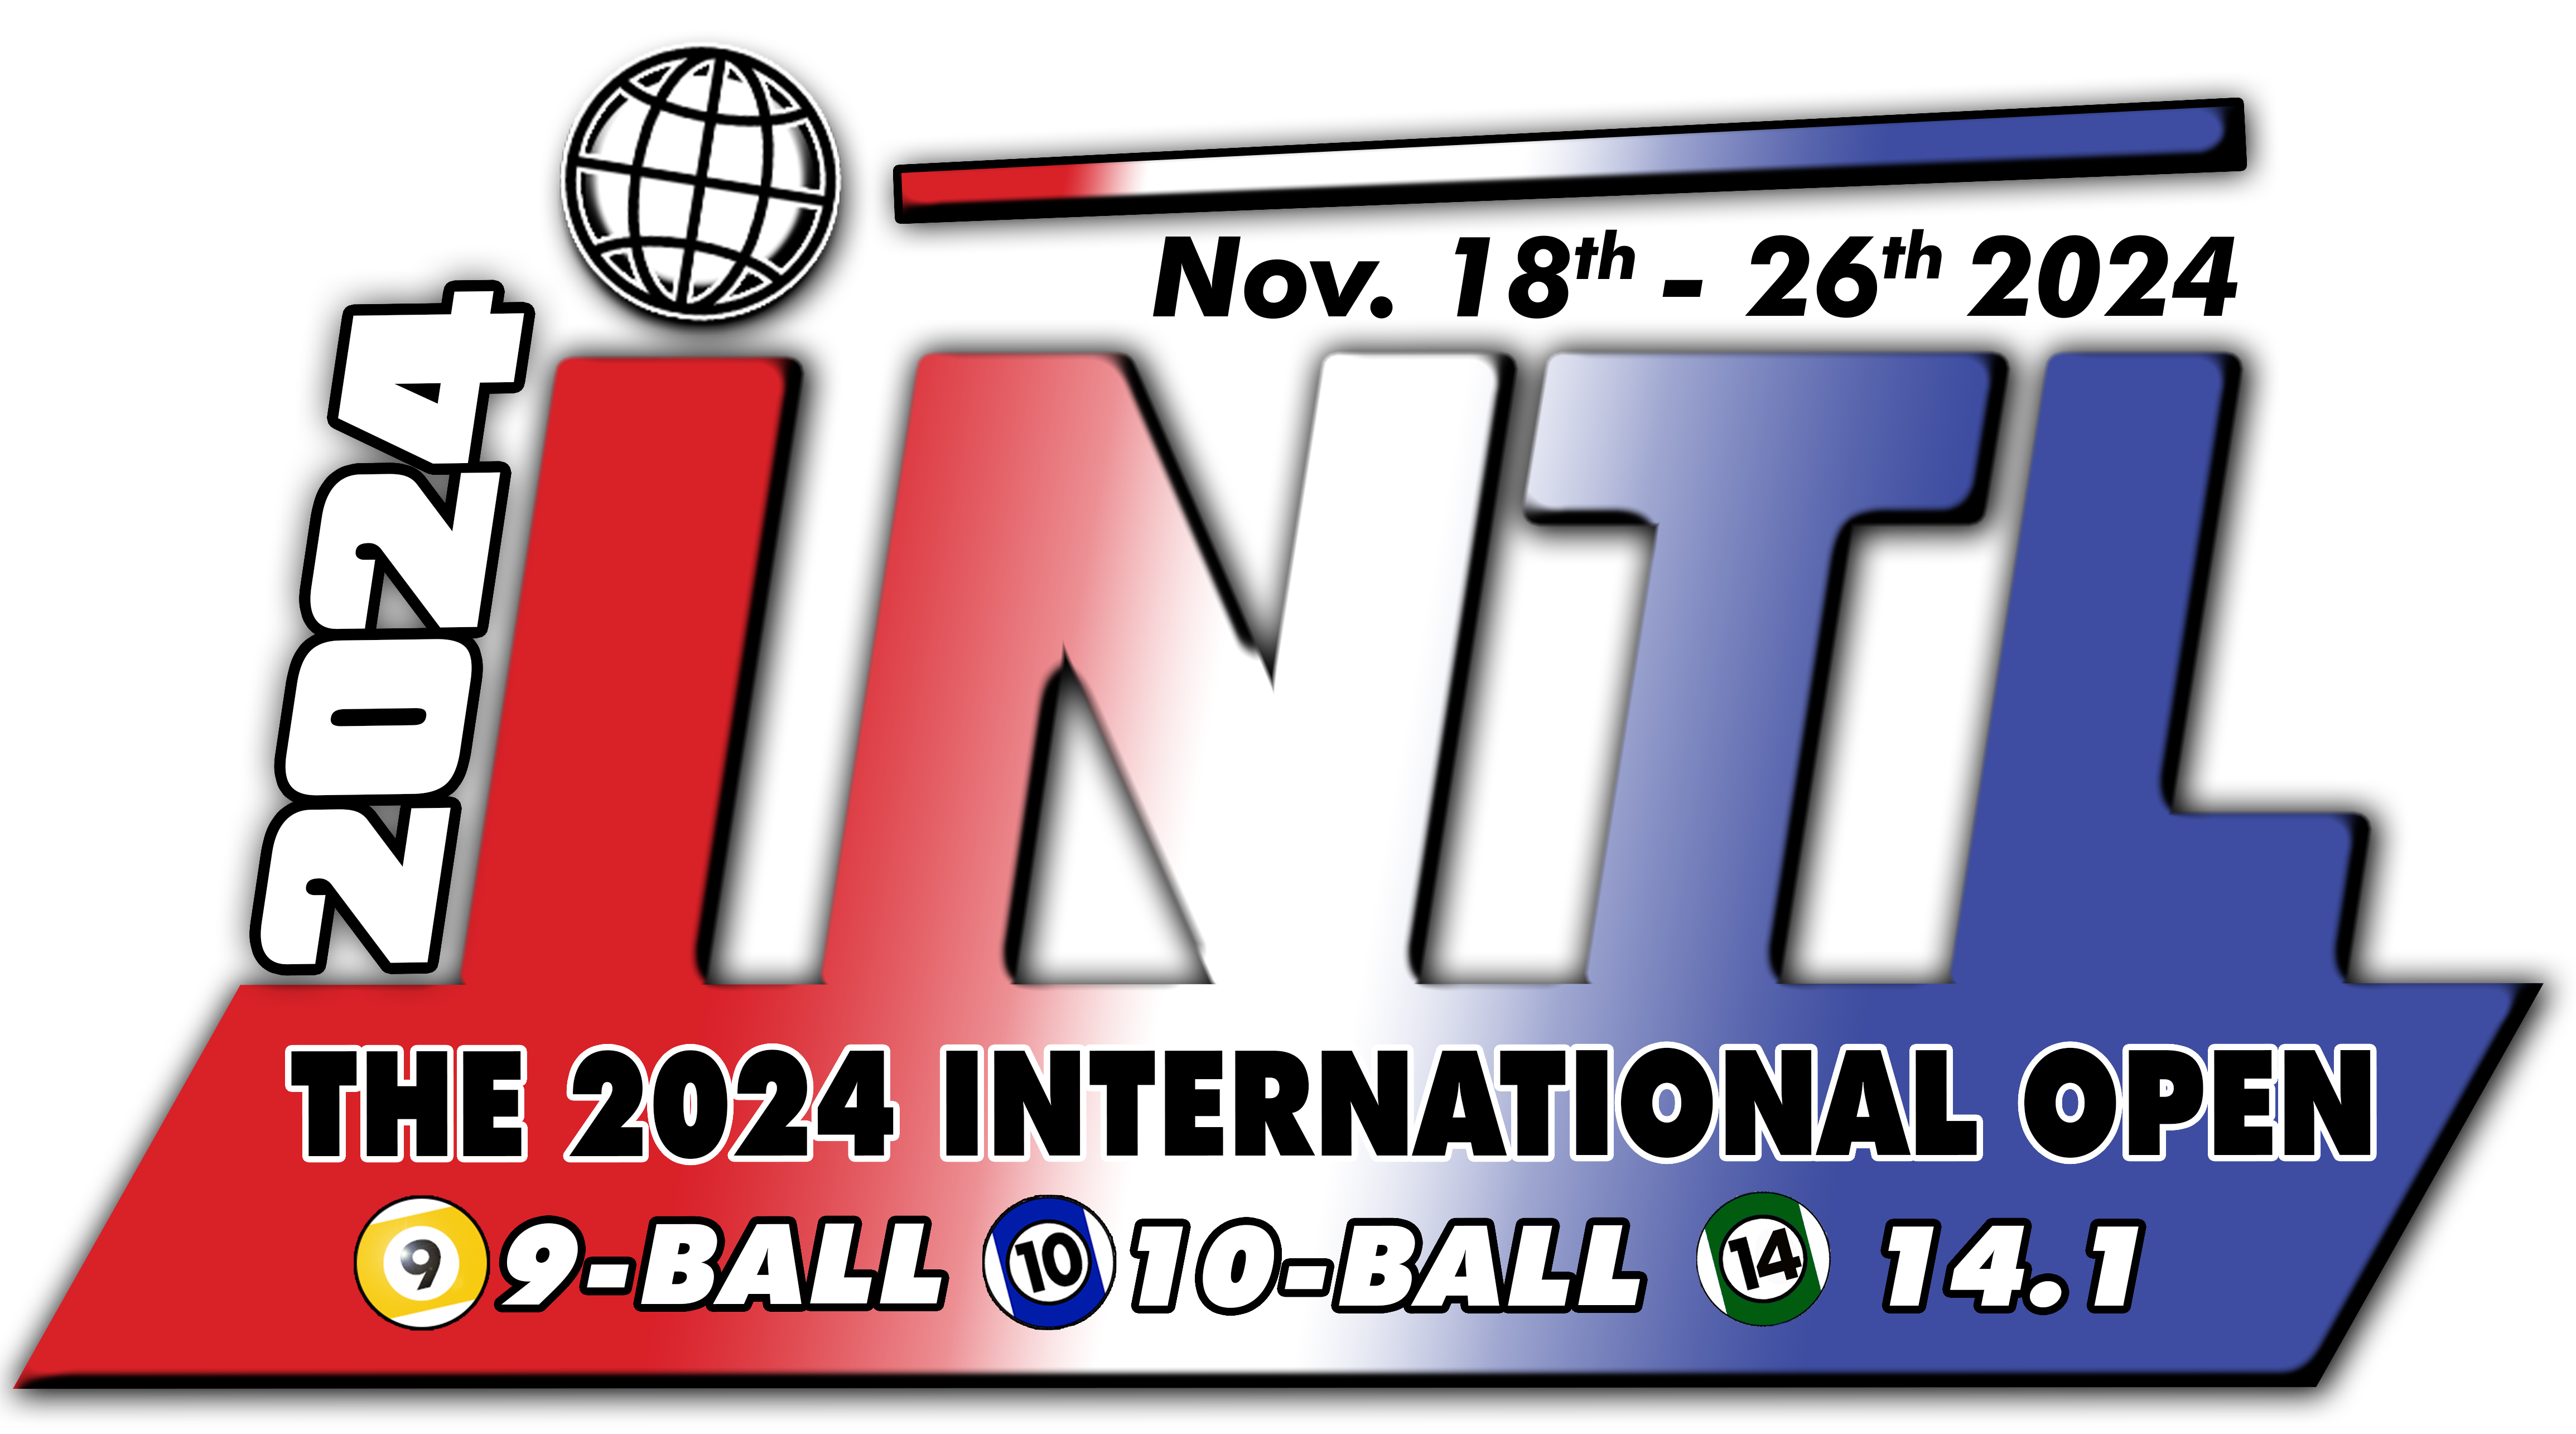 The 2024 International Open